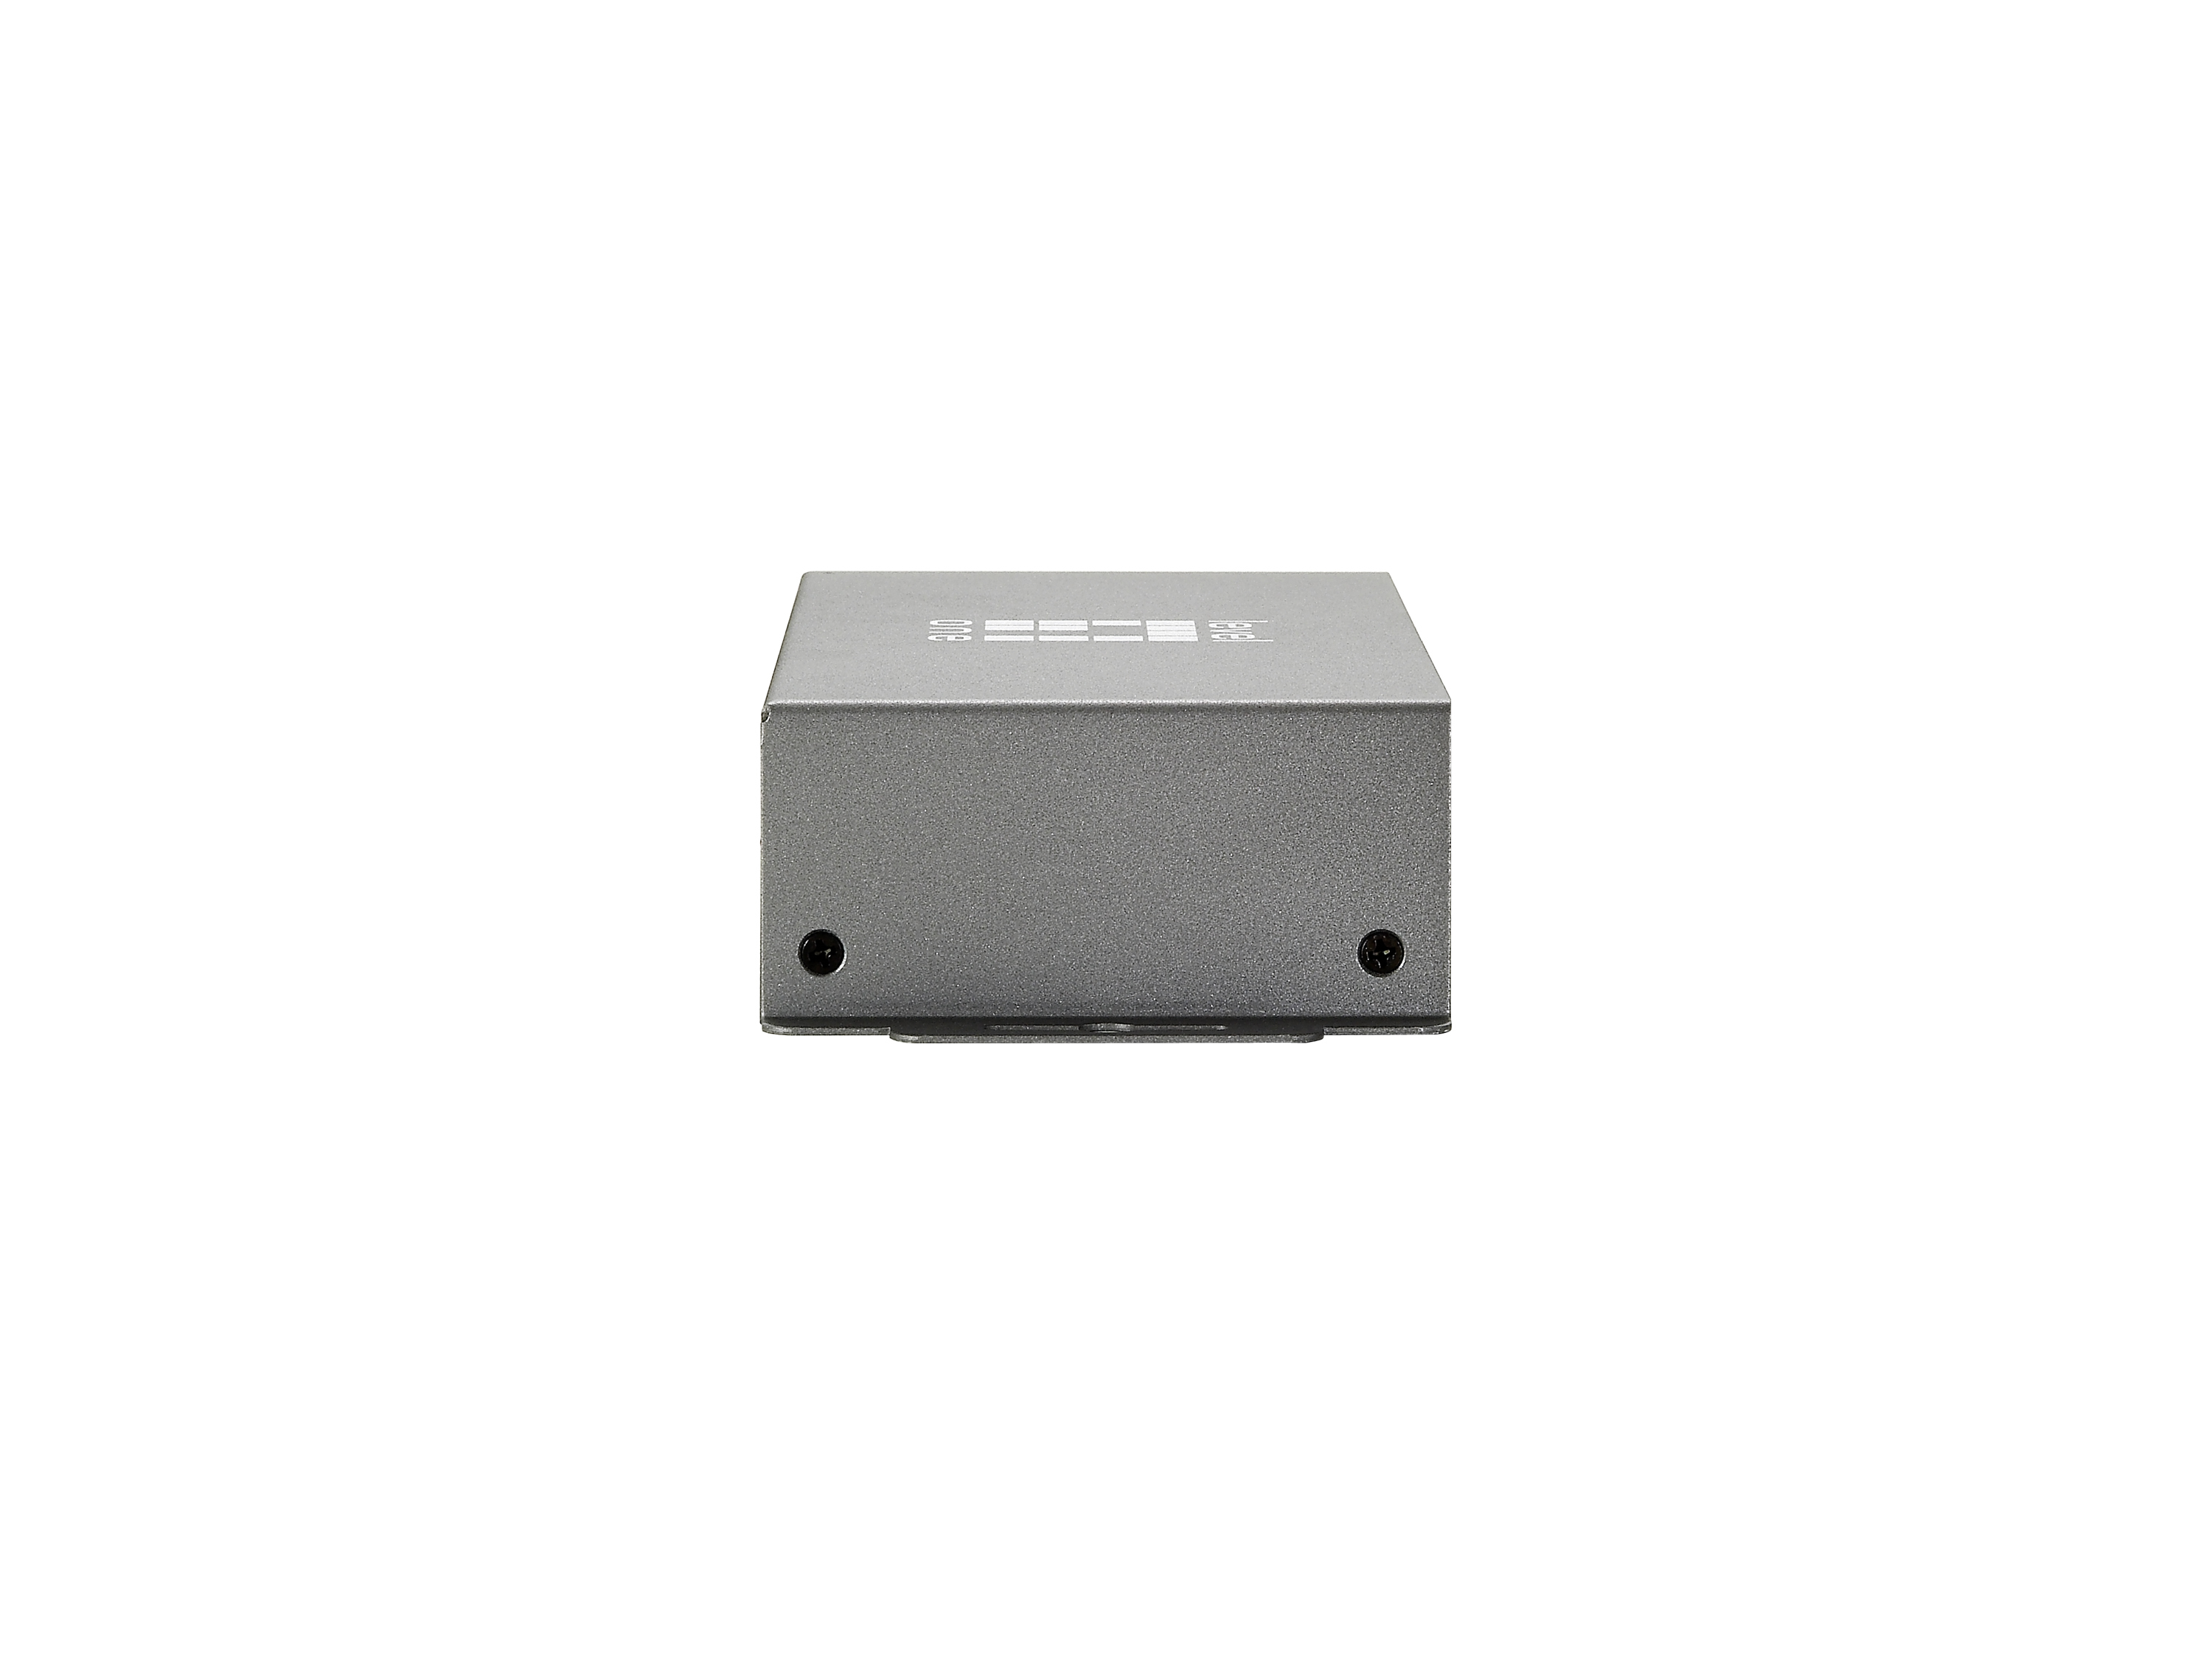 LevelOne HDSpider HVE-9004 HDMI Cat.5 Sender